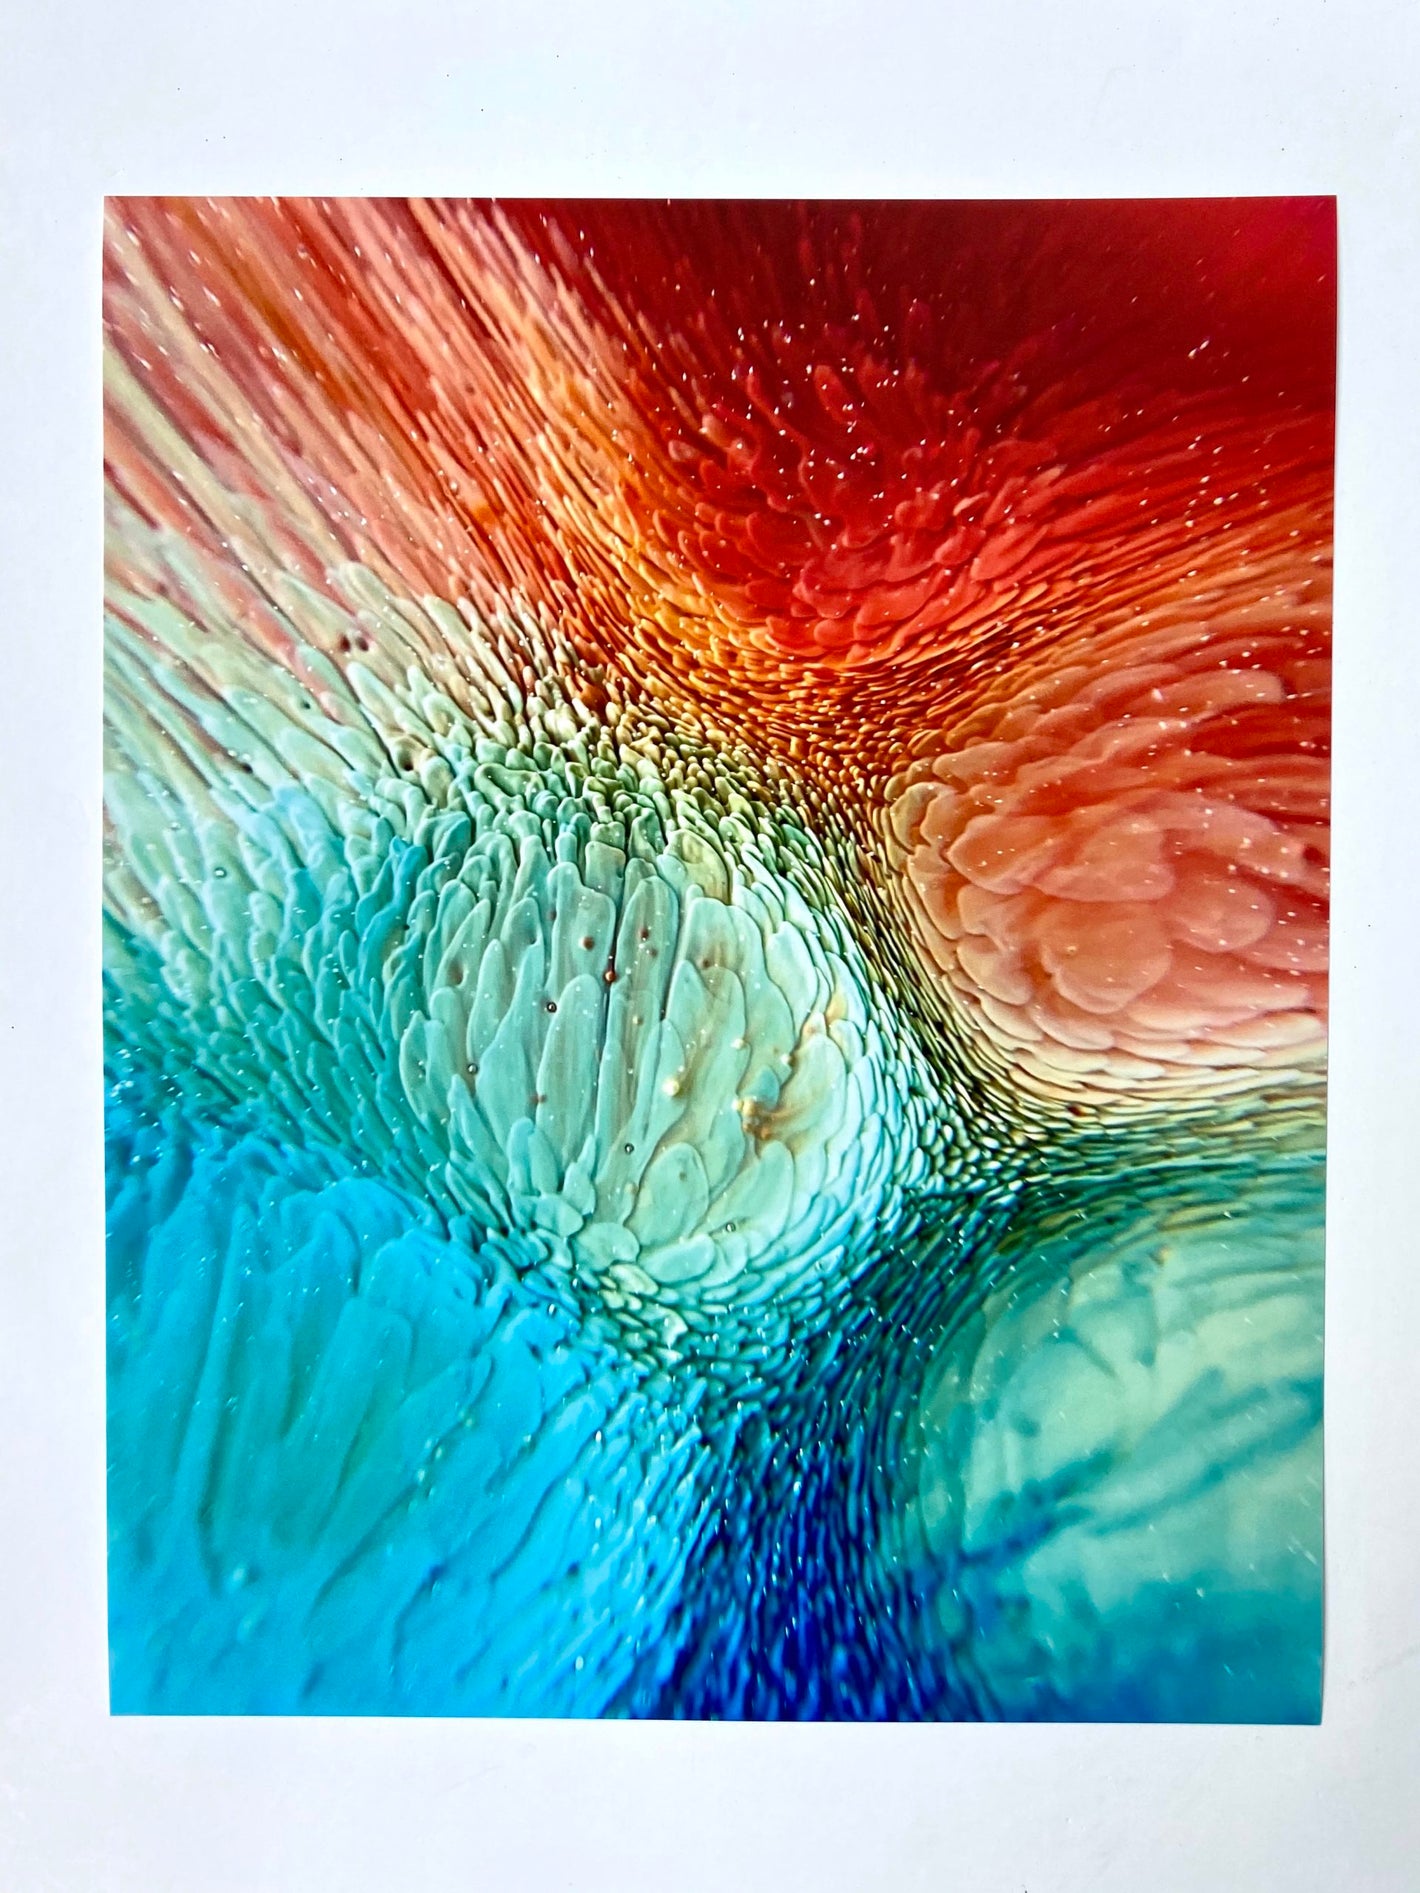 Bespattered Facade 8" x 10" Resin Petri Giclee Print #5